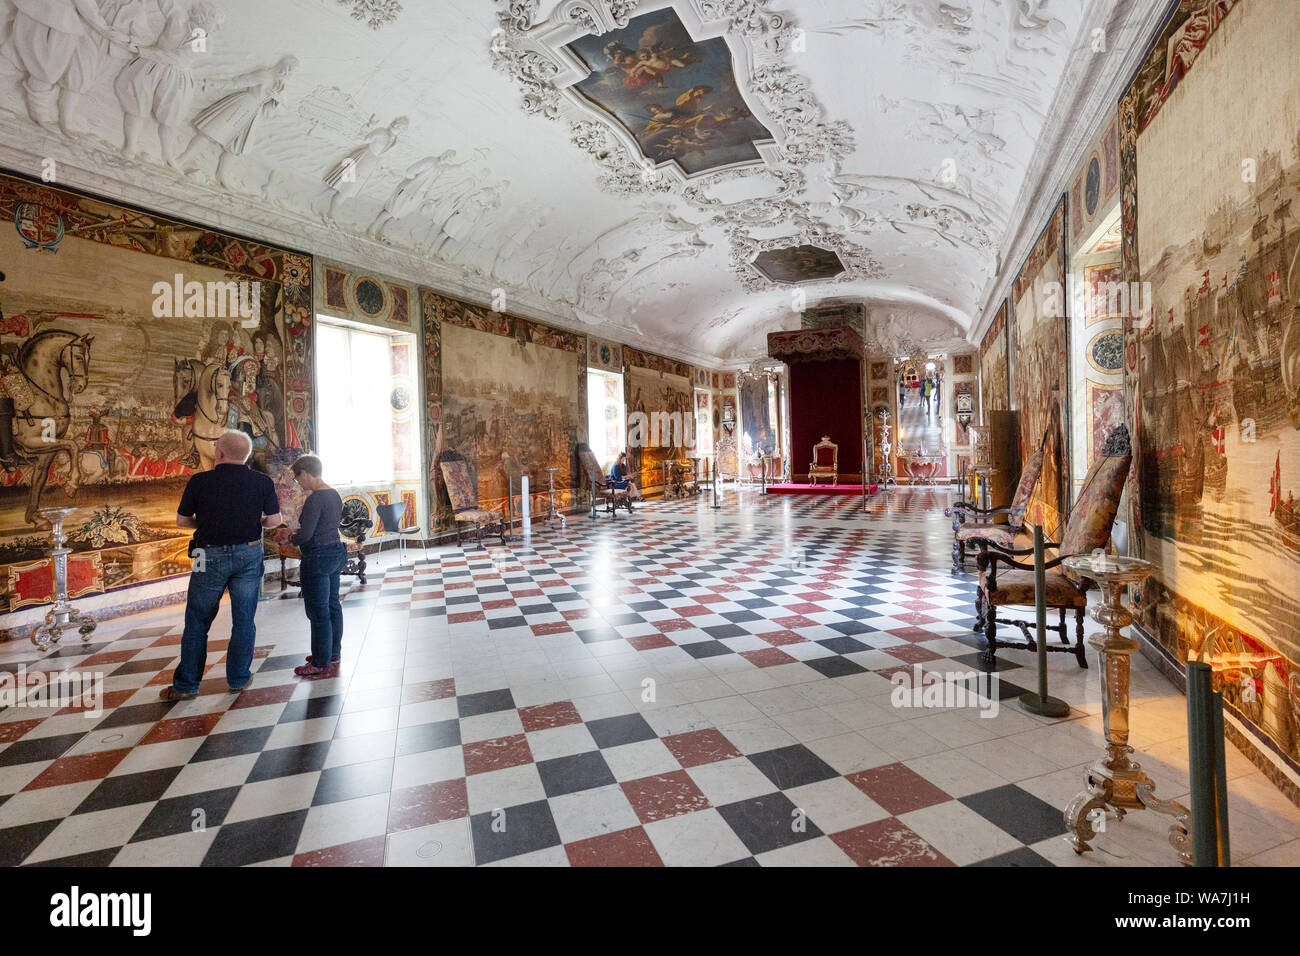 Visitors in the Main Hall or Great Hall,  Rosenborg Castle interior, Copenhagen Denmark Scandinavia Stock Photo